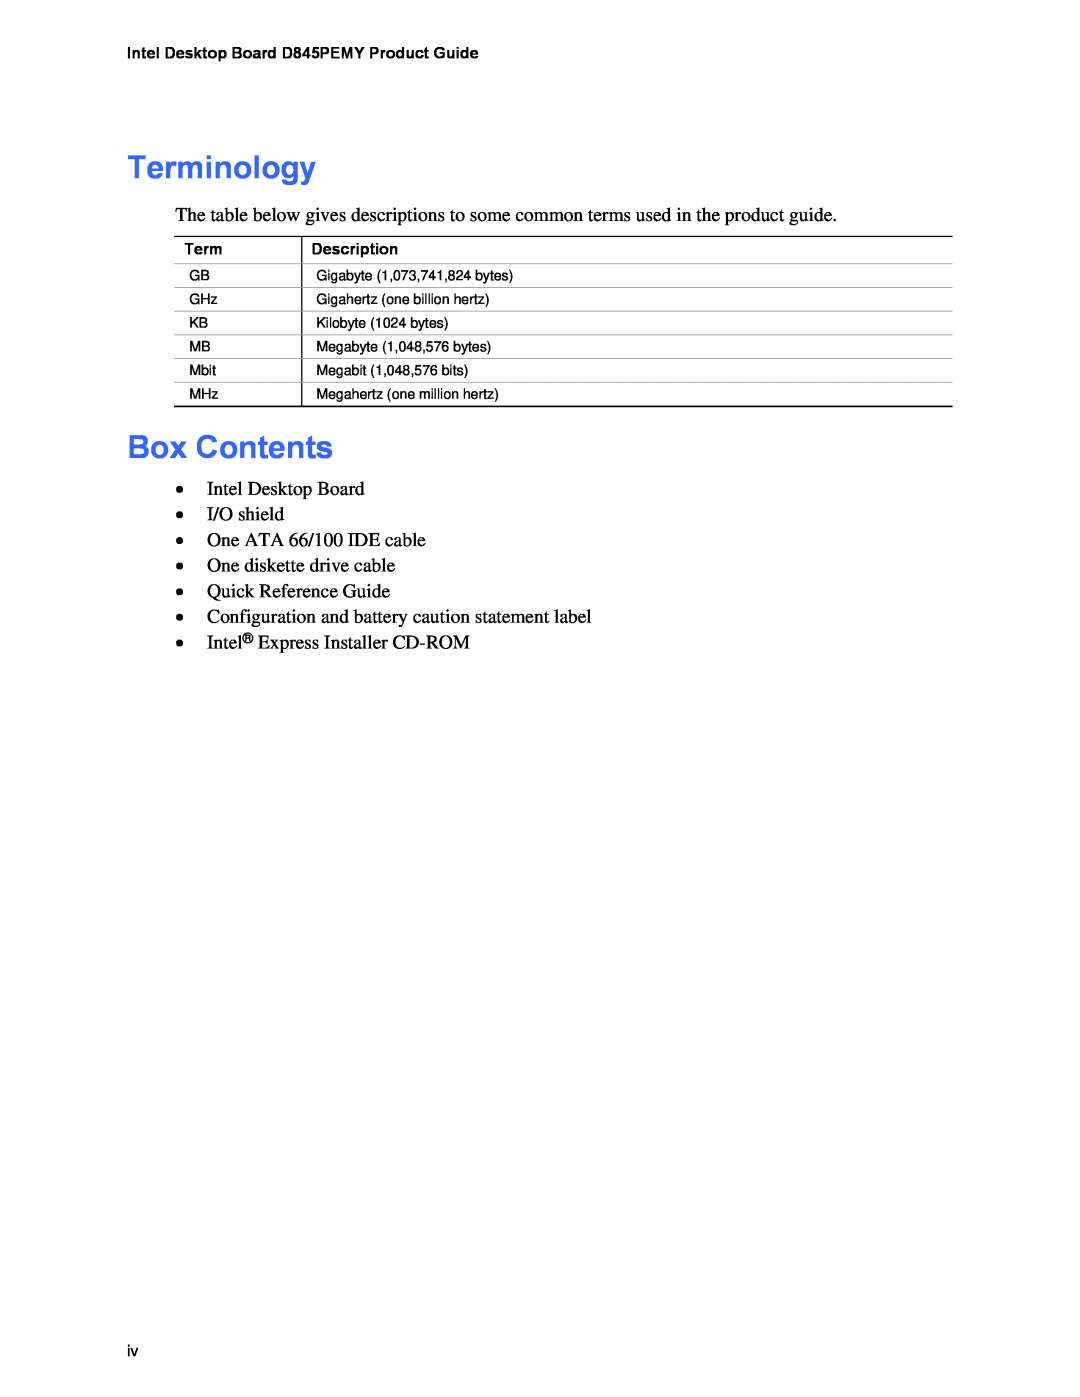 Intel D845PEMY manual Terminology, Box Contents 